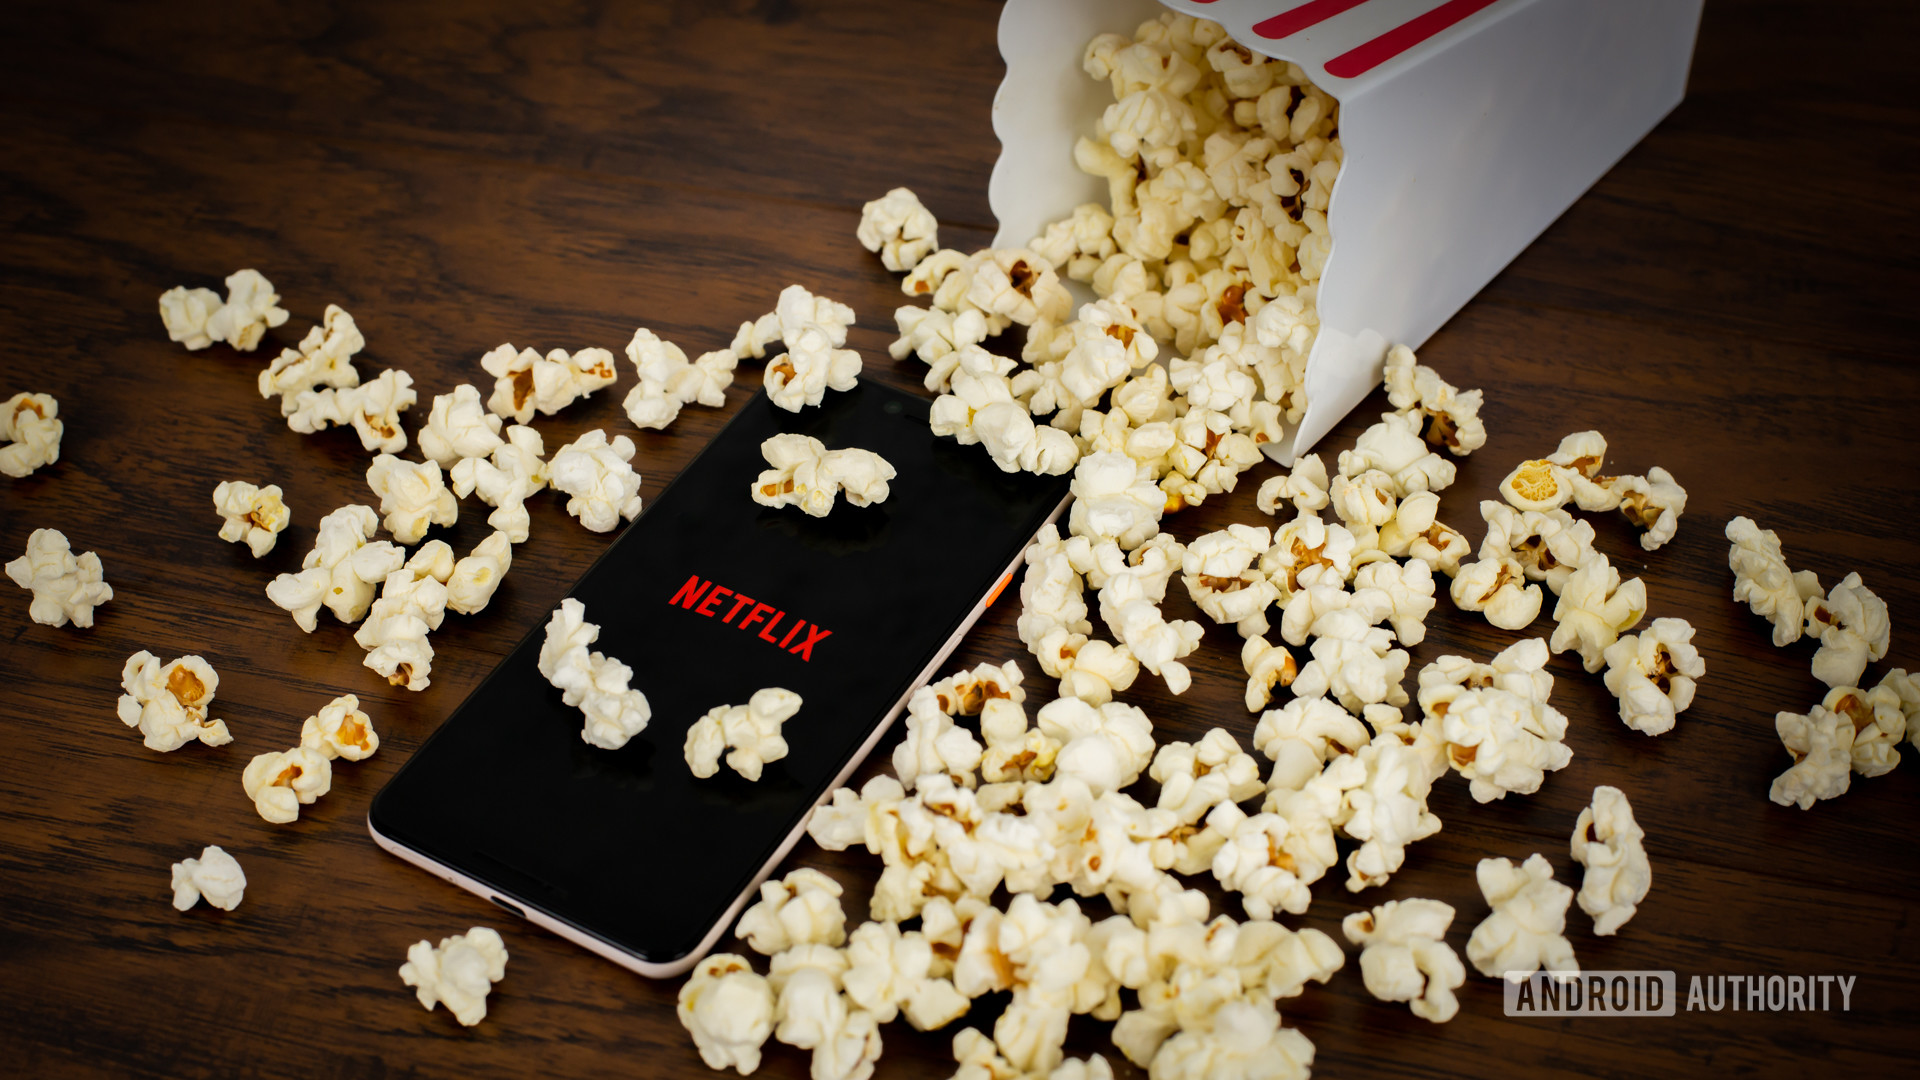 Netflix with popcorn stock photo 2